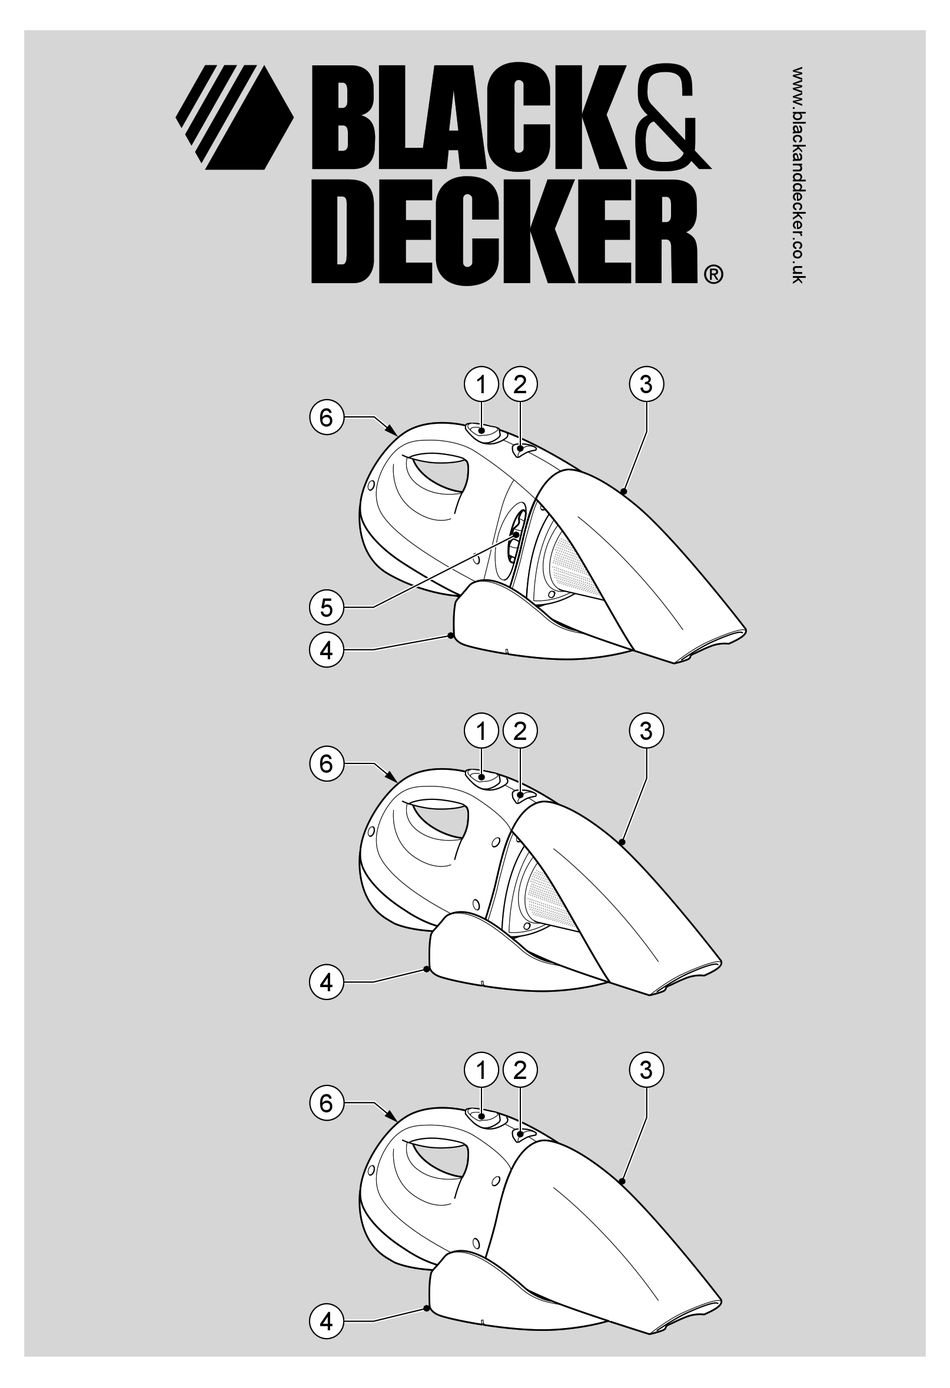 black and decker dustbuster 4.8v manual